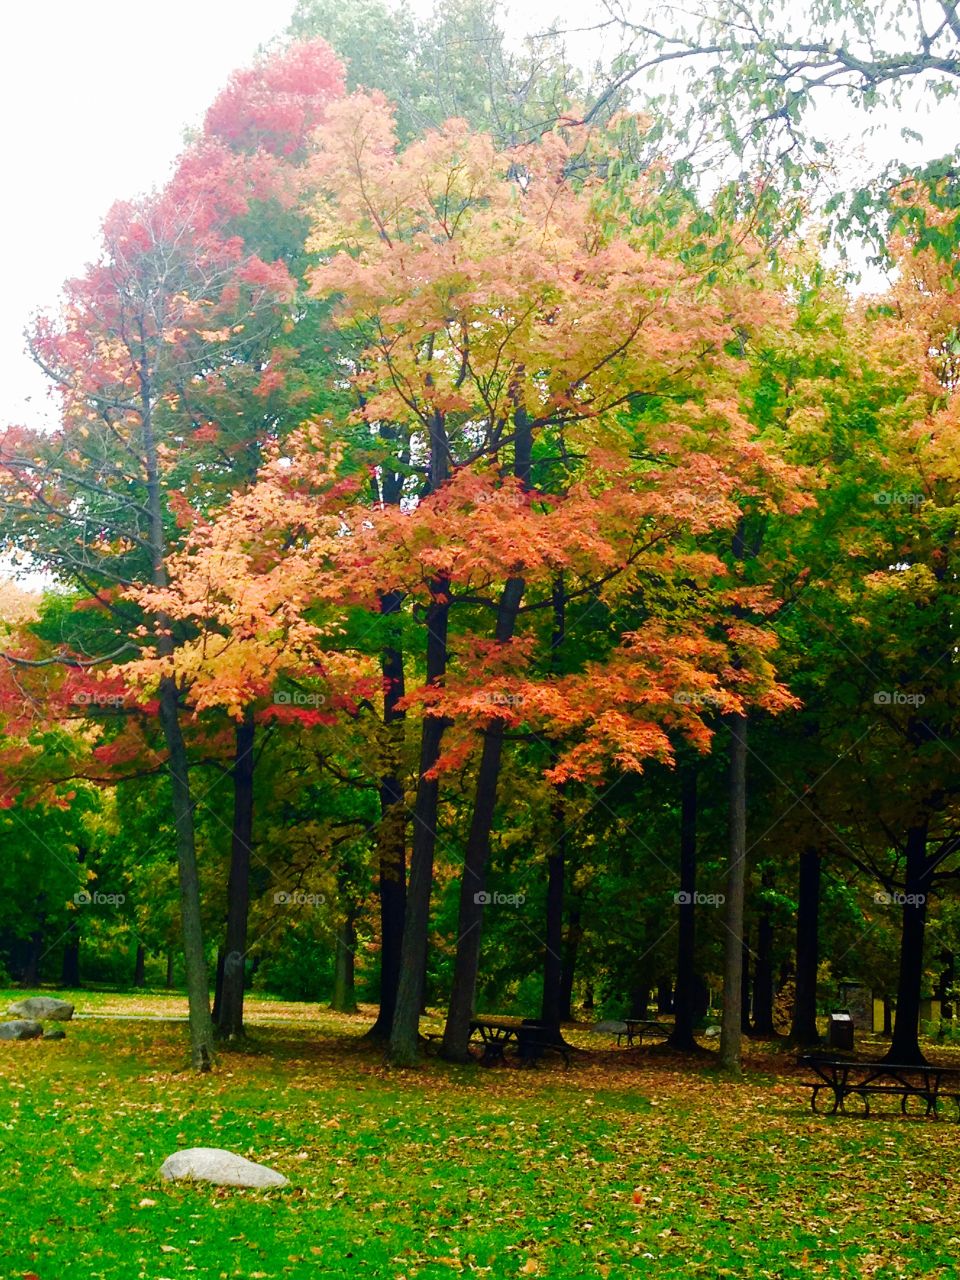 Autumn Tree in Park-Octobre 08 2014- Angrignon Park- Montreal, Quebec, Canada 